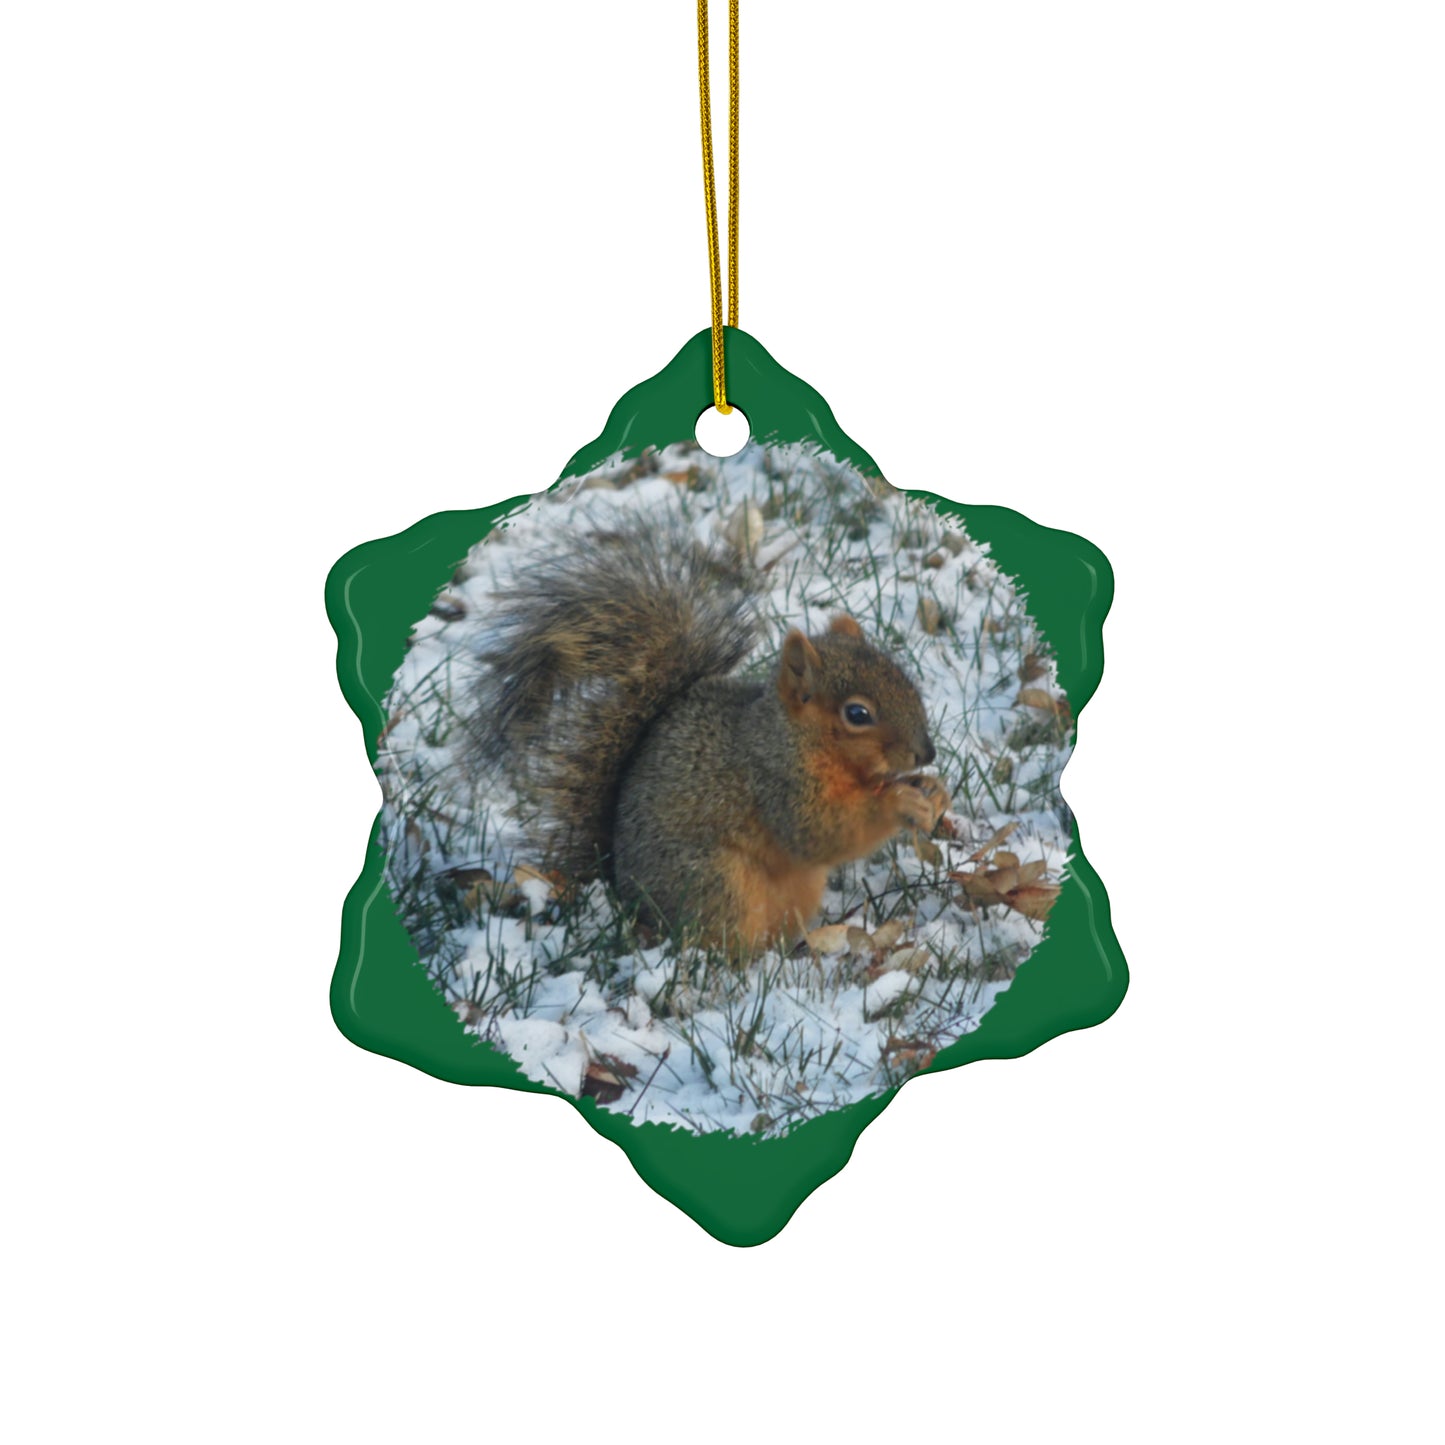 Winter Squirrel Ceramic Ornaments